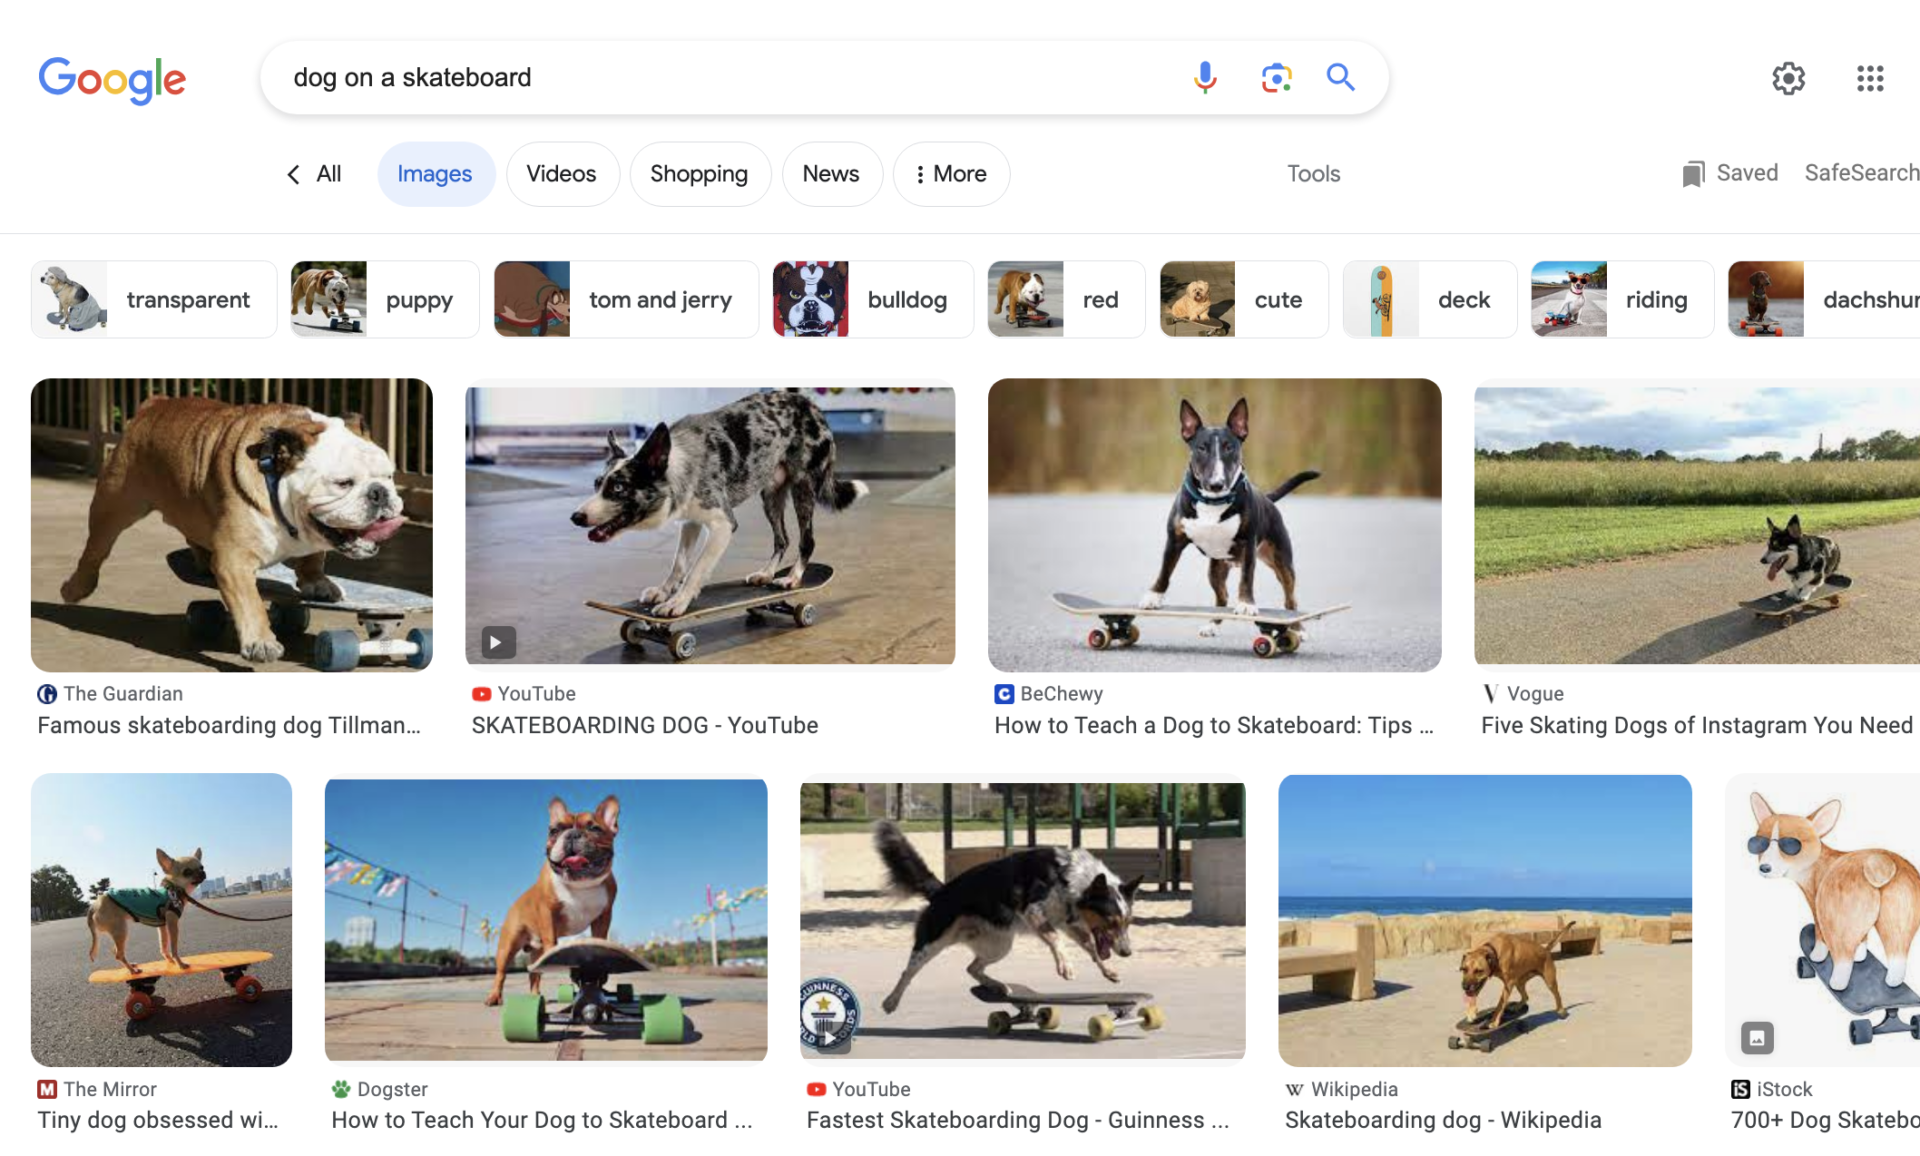 dog on a skateboard: Google search